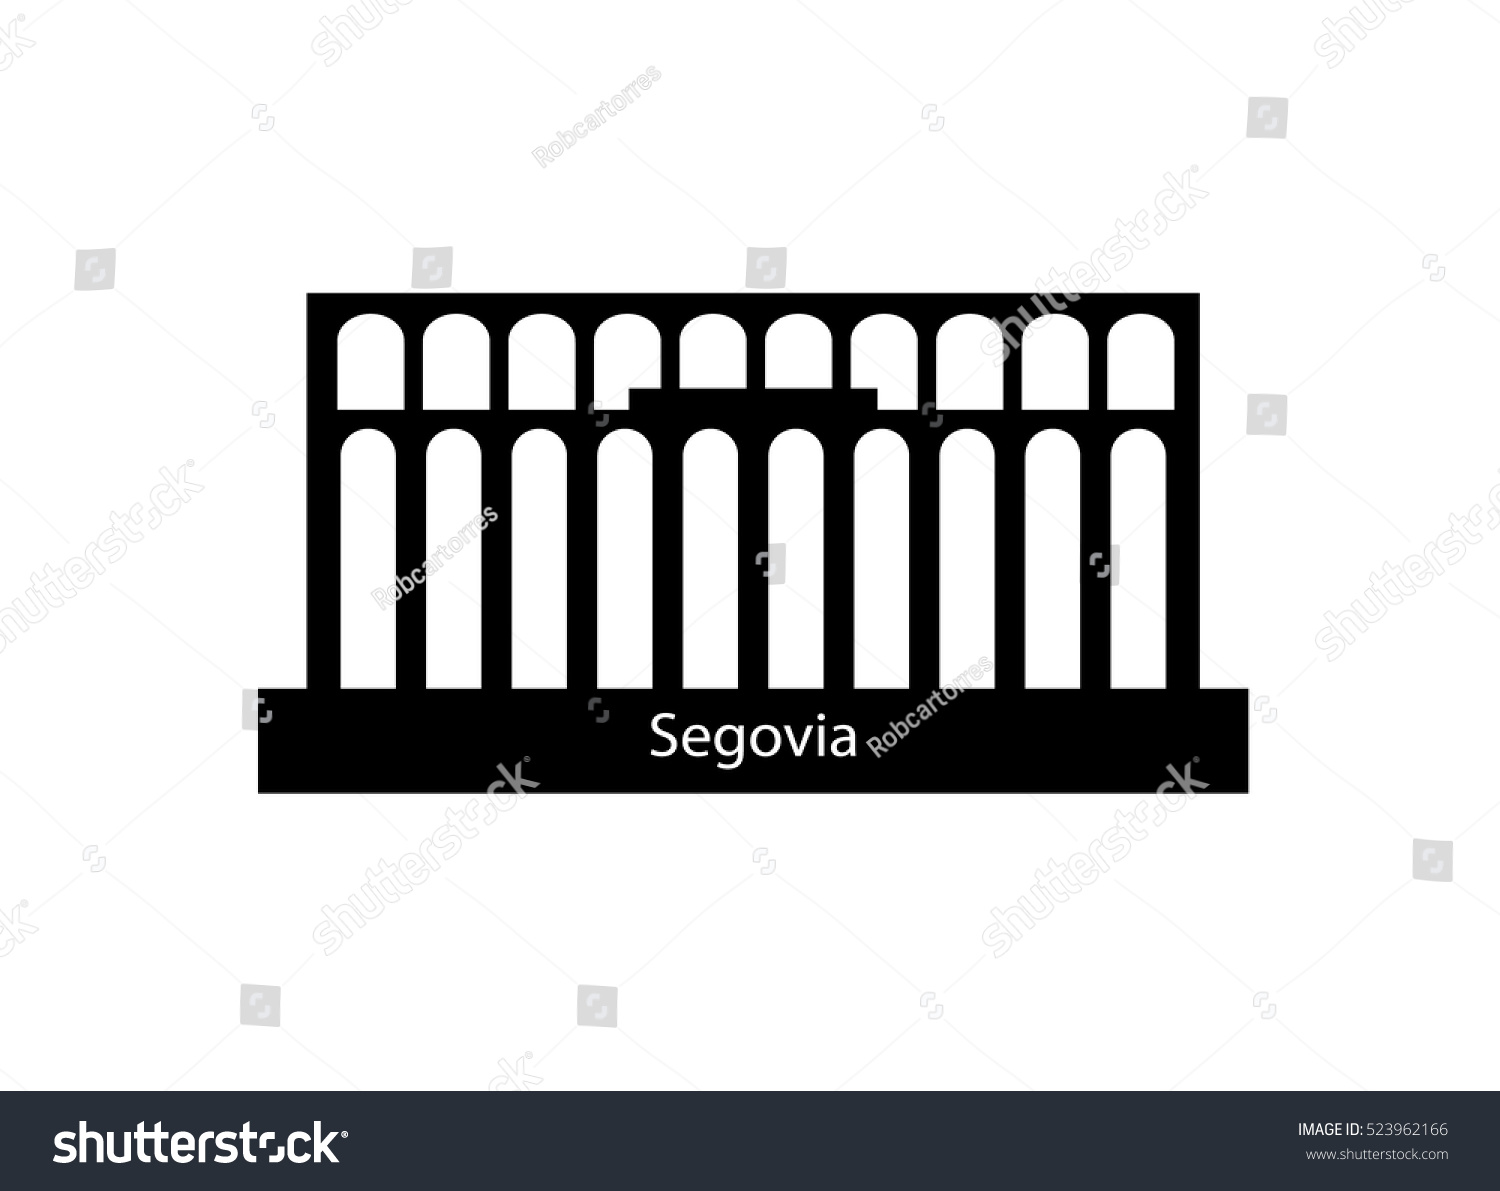 SVG of Skyline of segovia aqueduct in spain svg